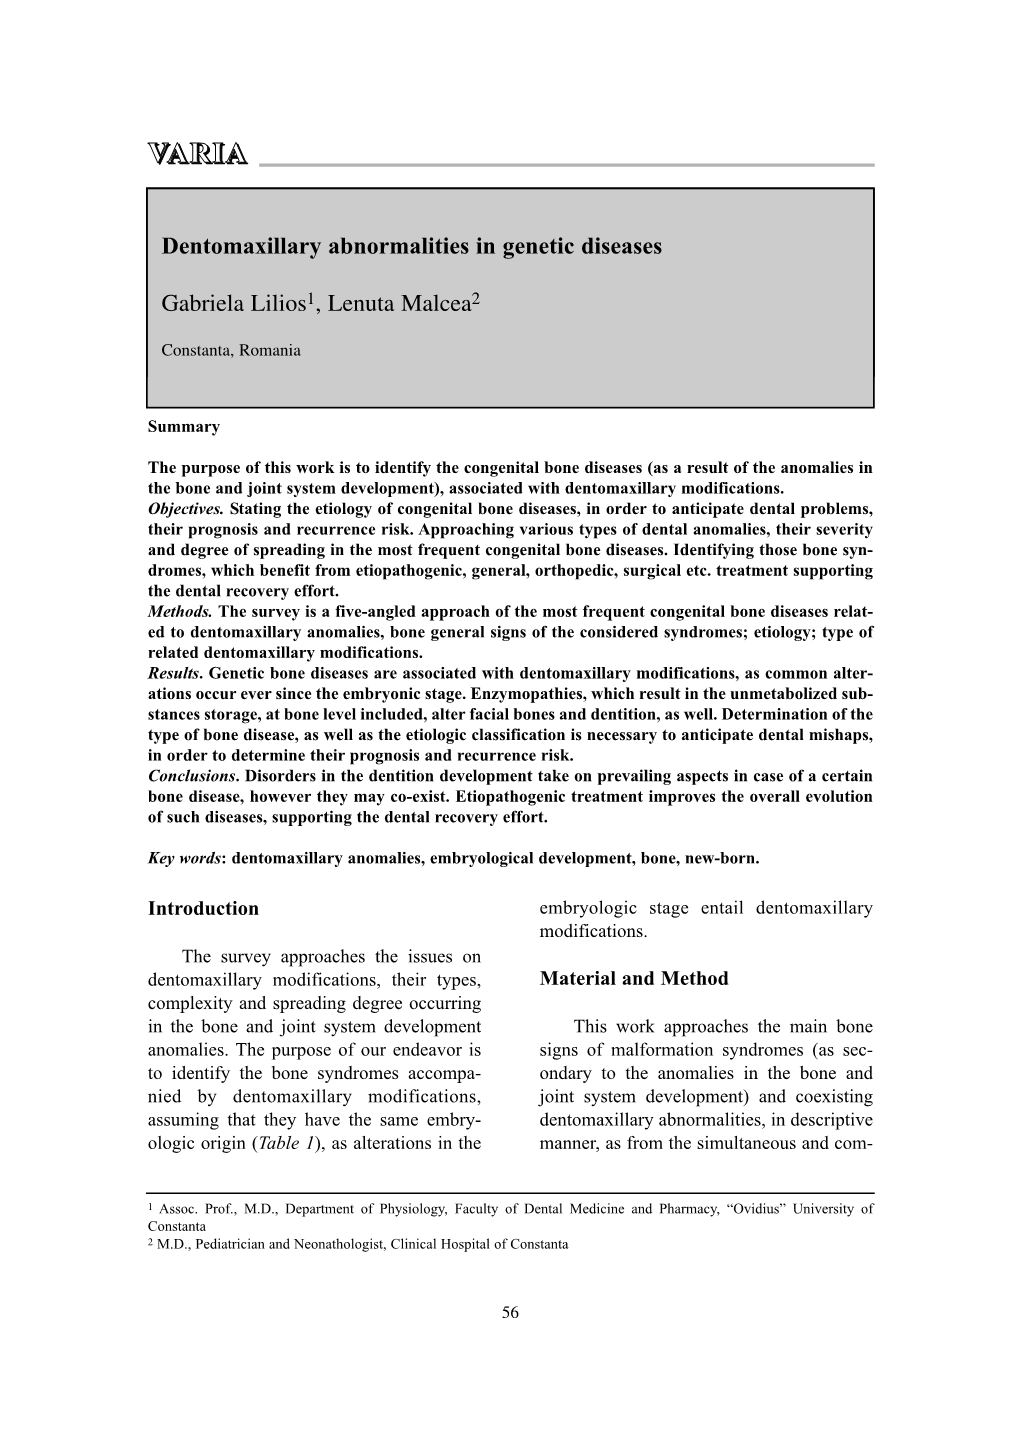 Dentomaxillary Abnormalities in Genetic Diseases